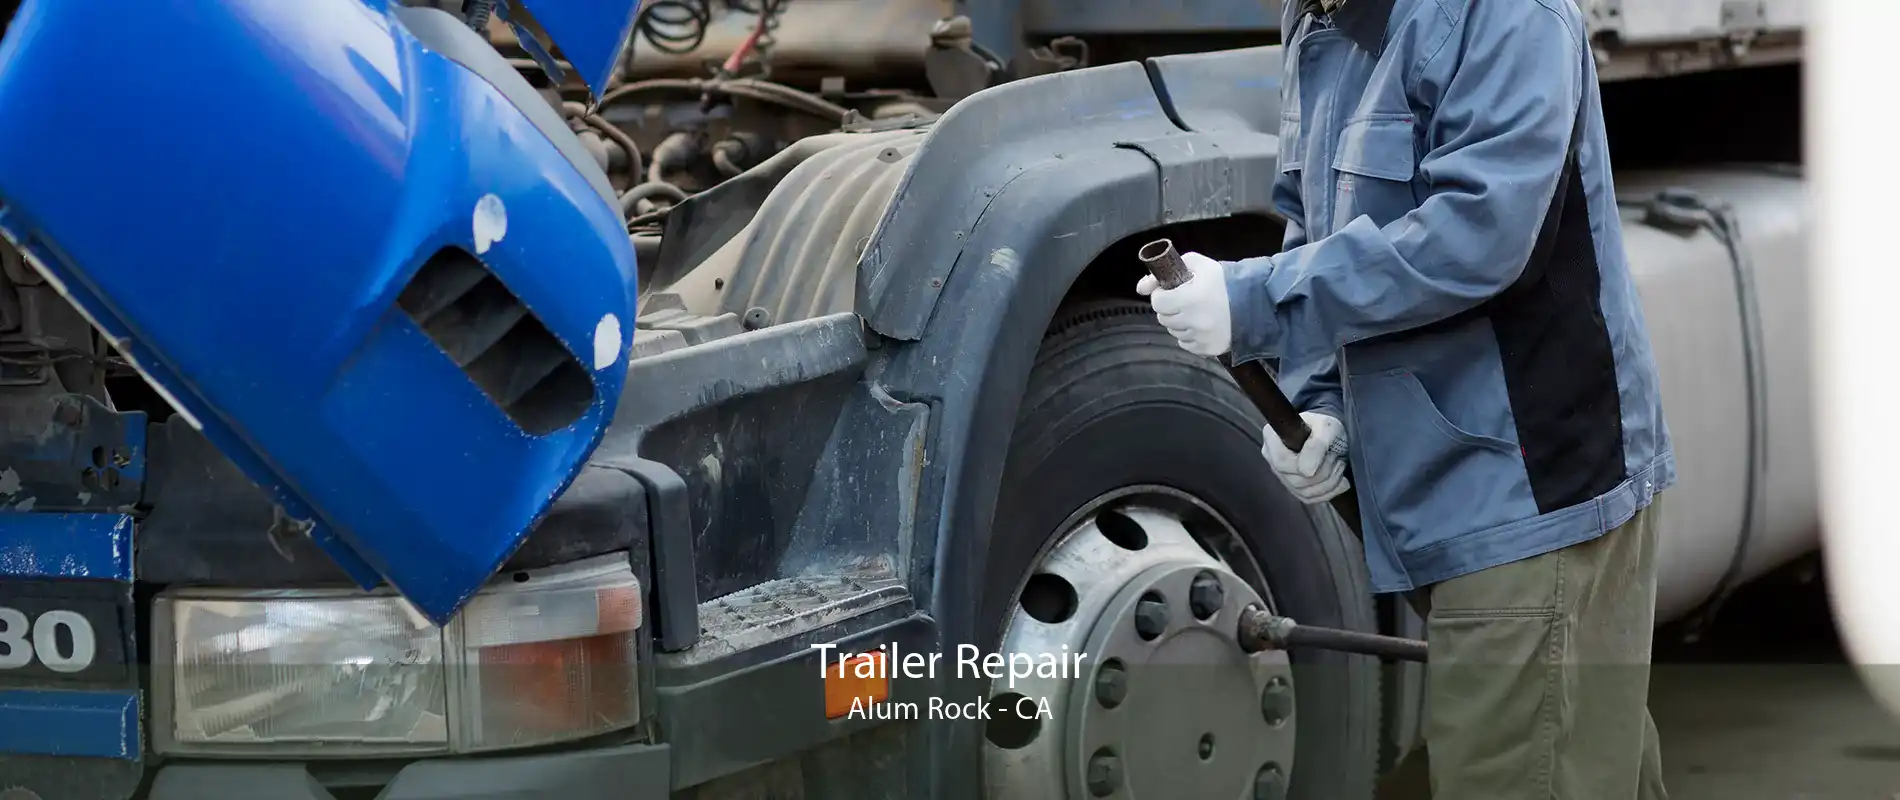 Trailer Repair Alum Rock - CA